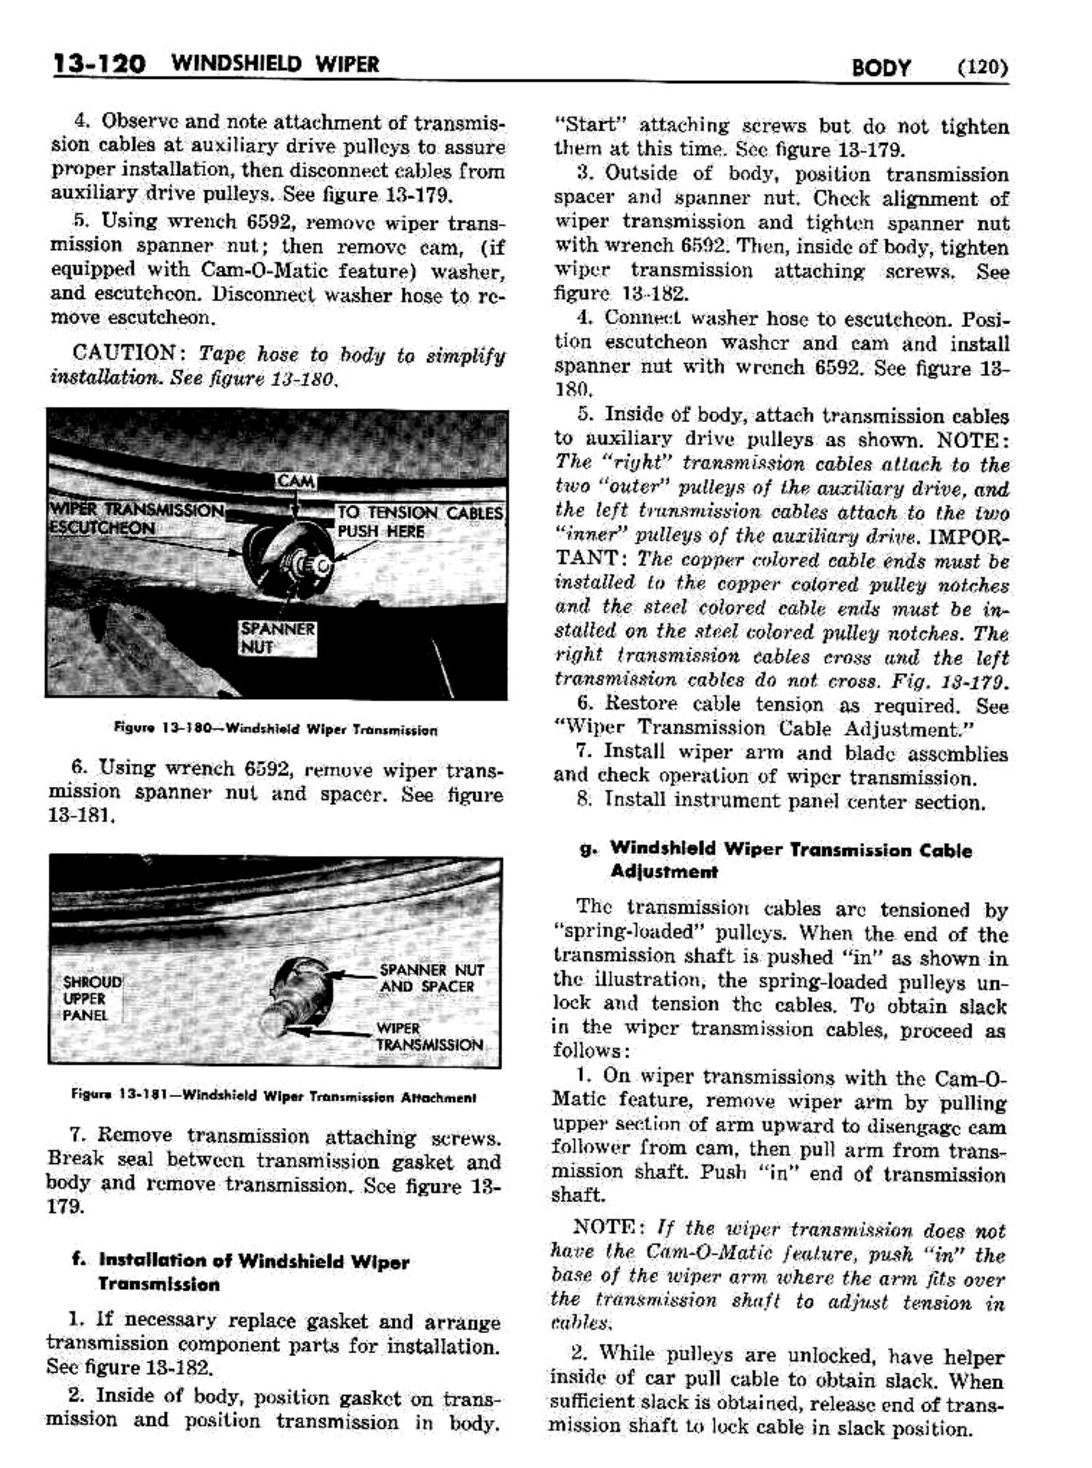 n_1958 Buick Body Service Manual-121-121.jpg